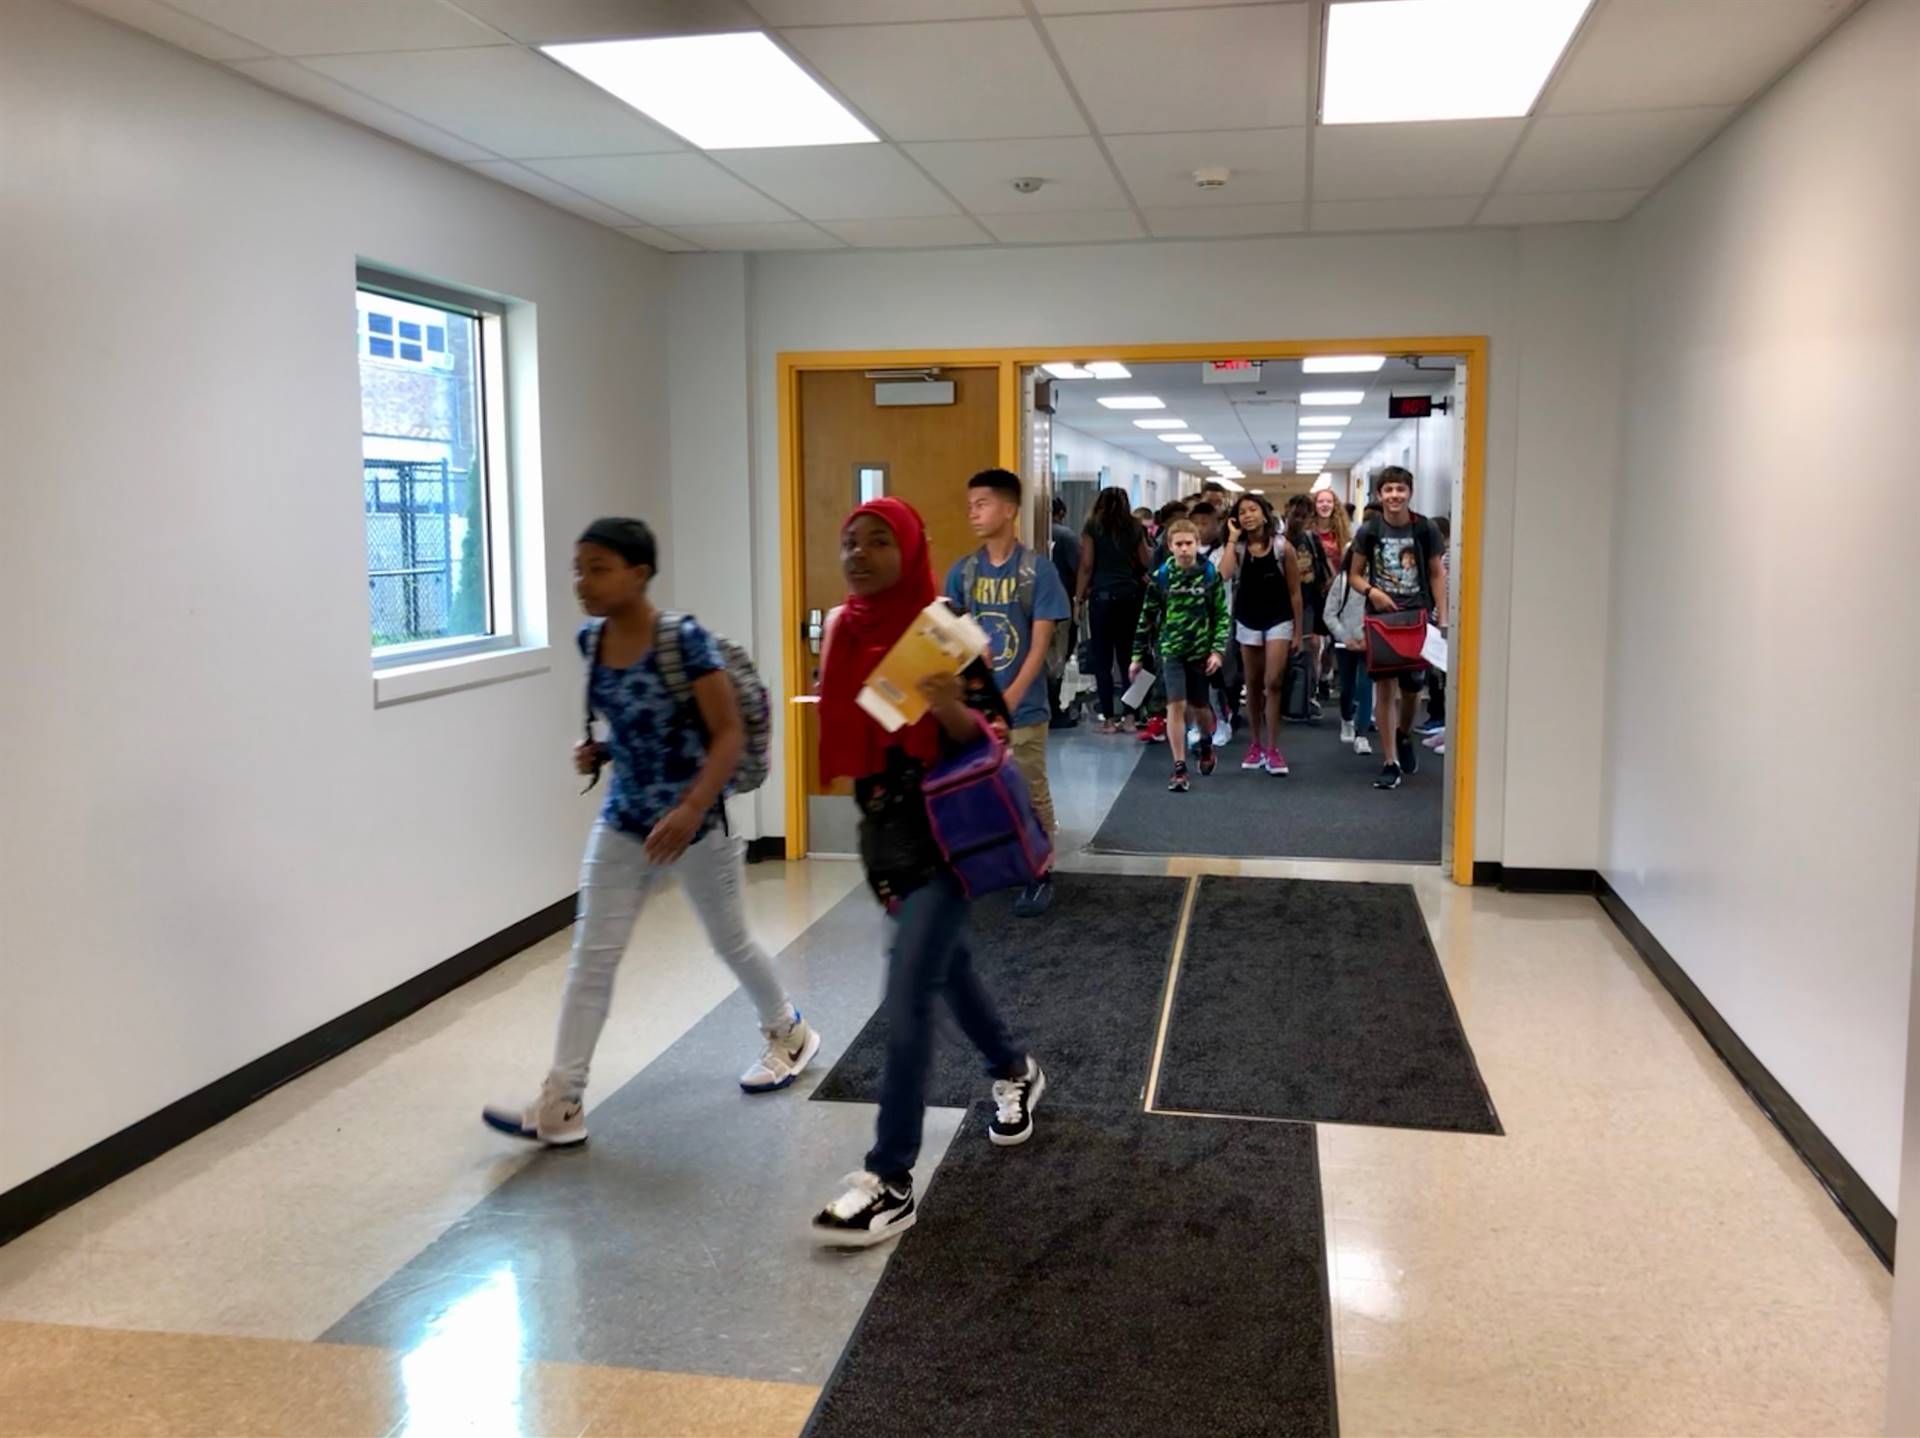 Students walking through hallway